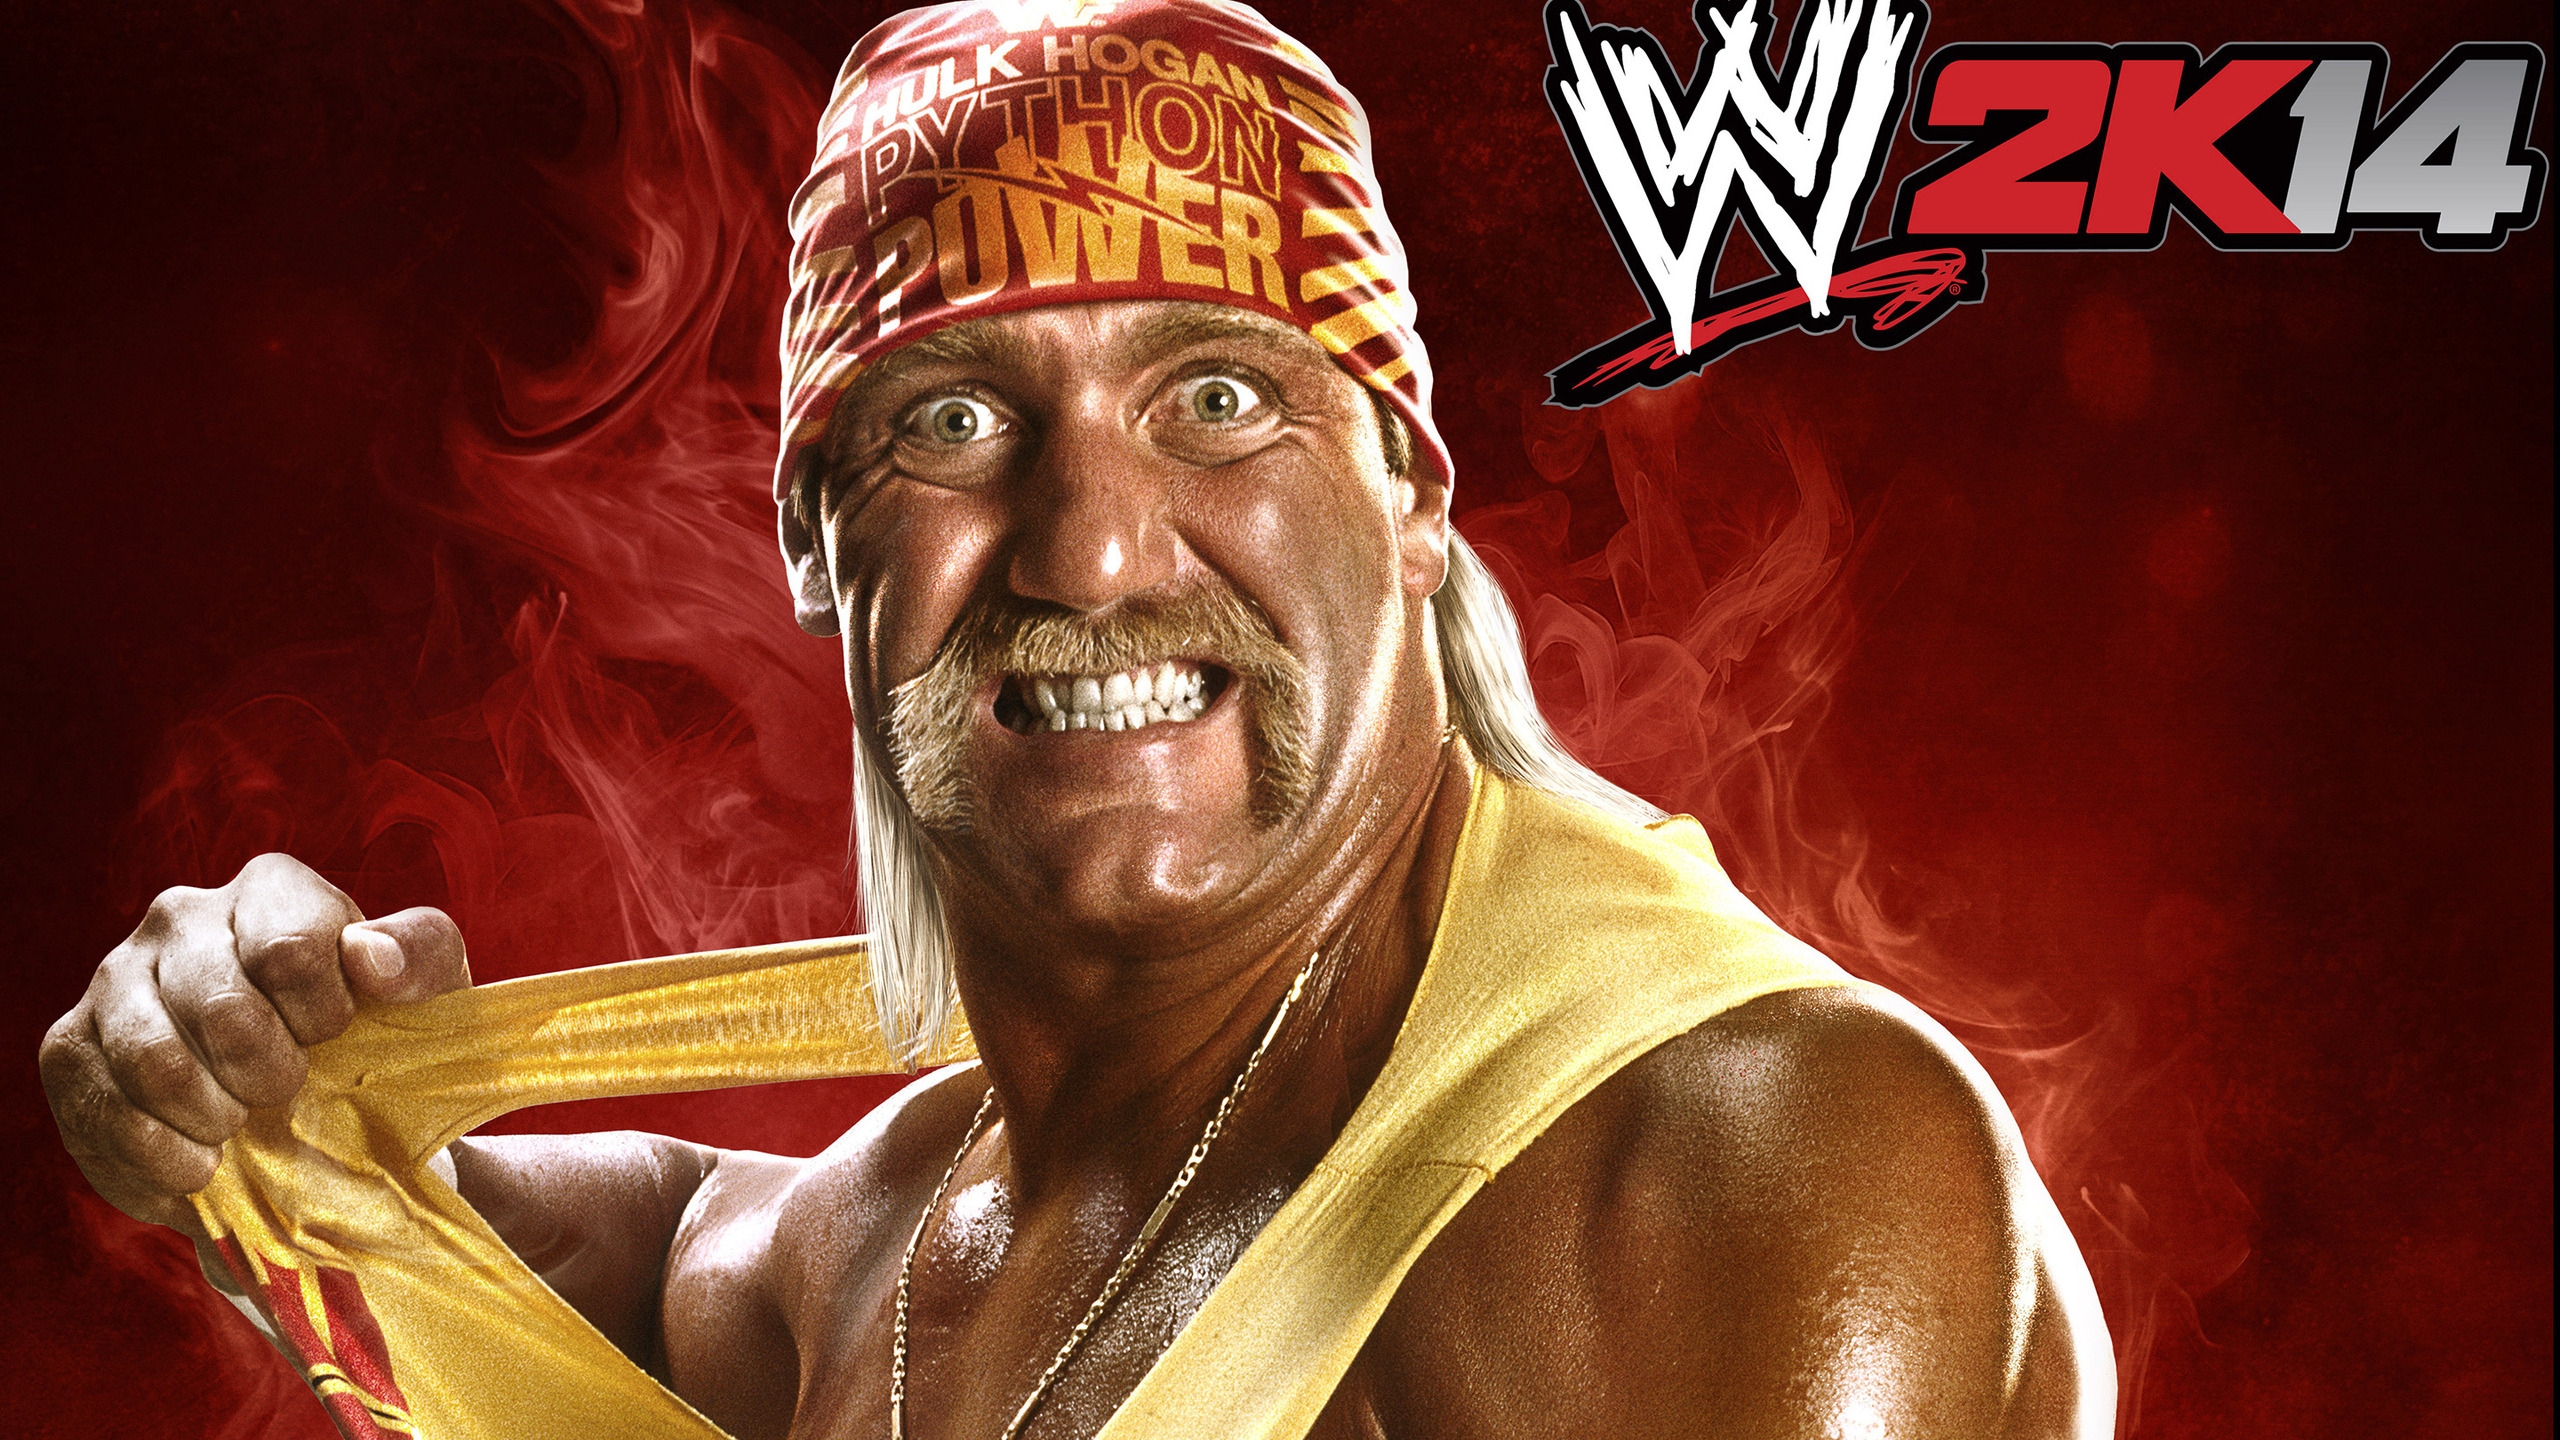 Hulk Hogan WWE2K14 for 2560x1440 HDTV resolution